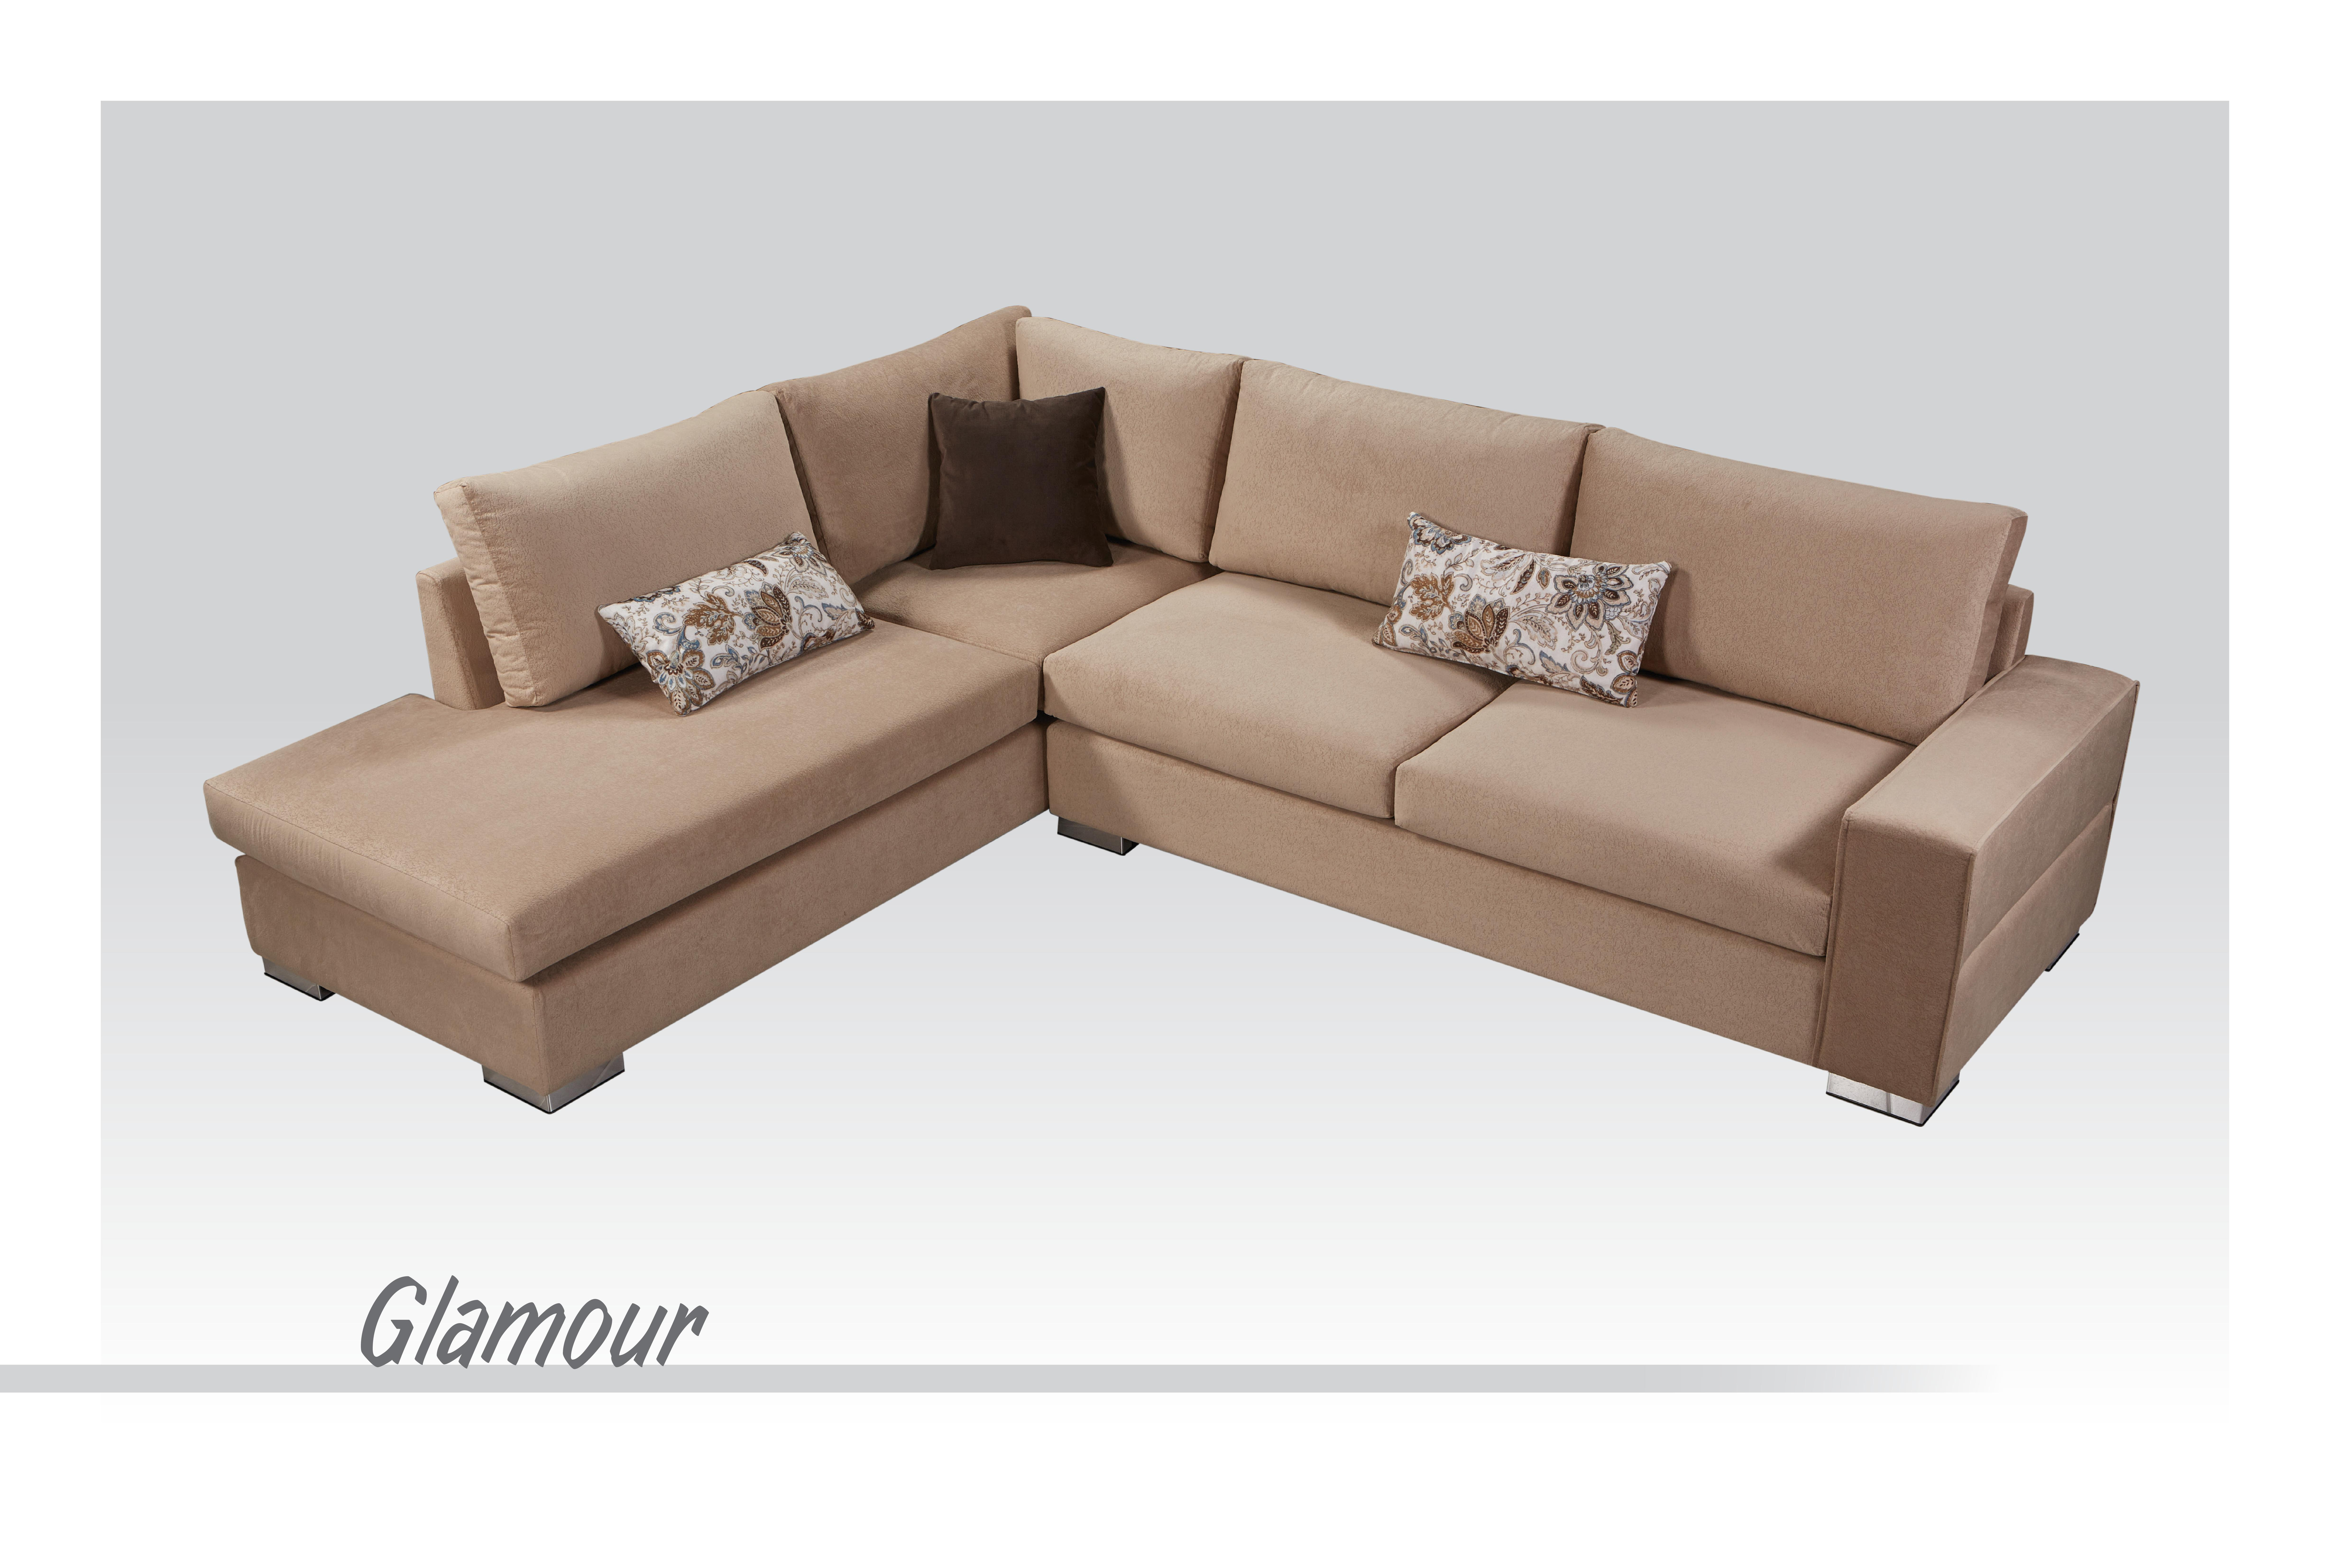 Corner Sofa "Glamour"